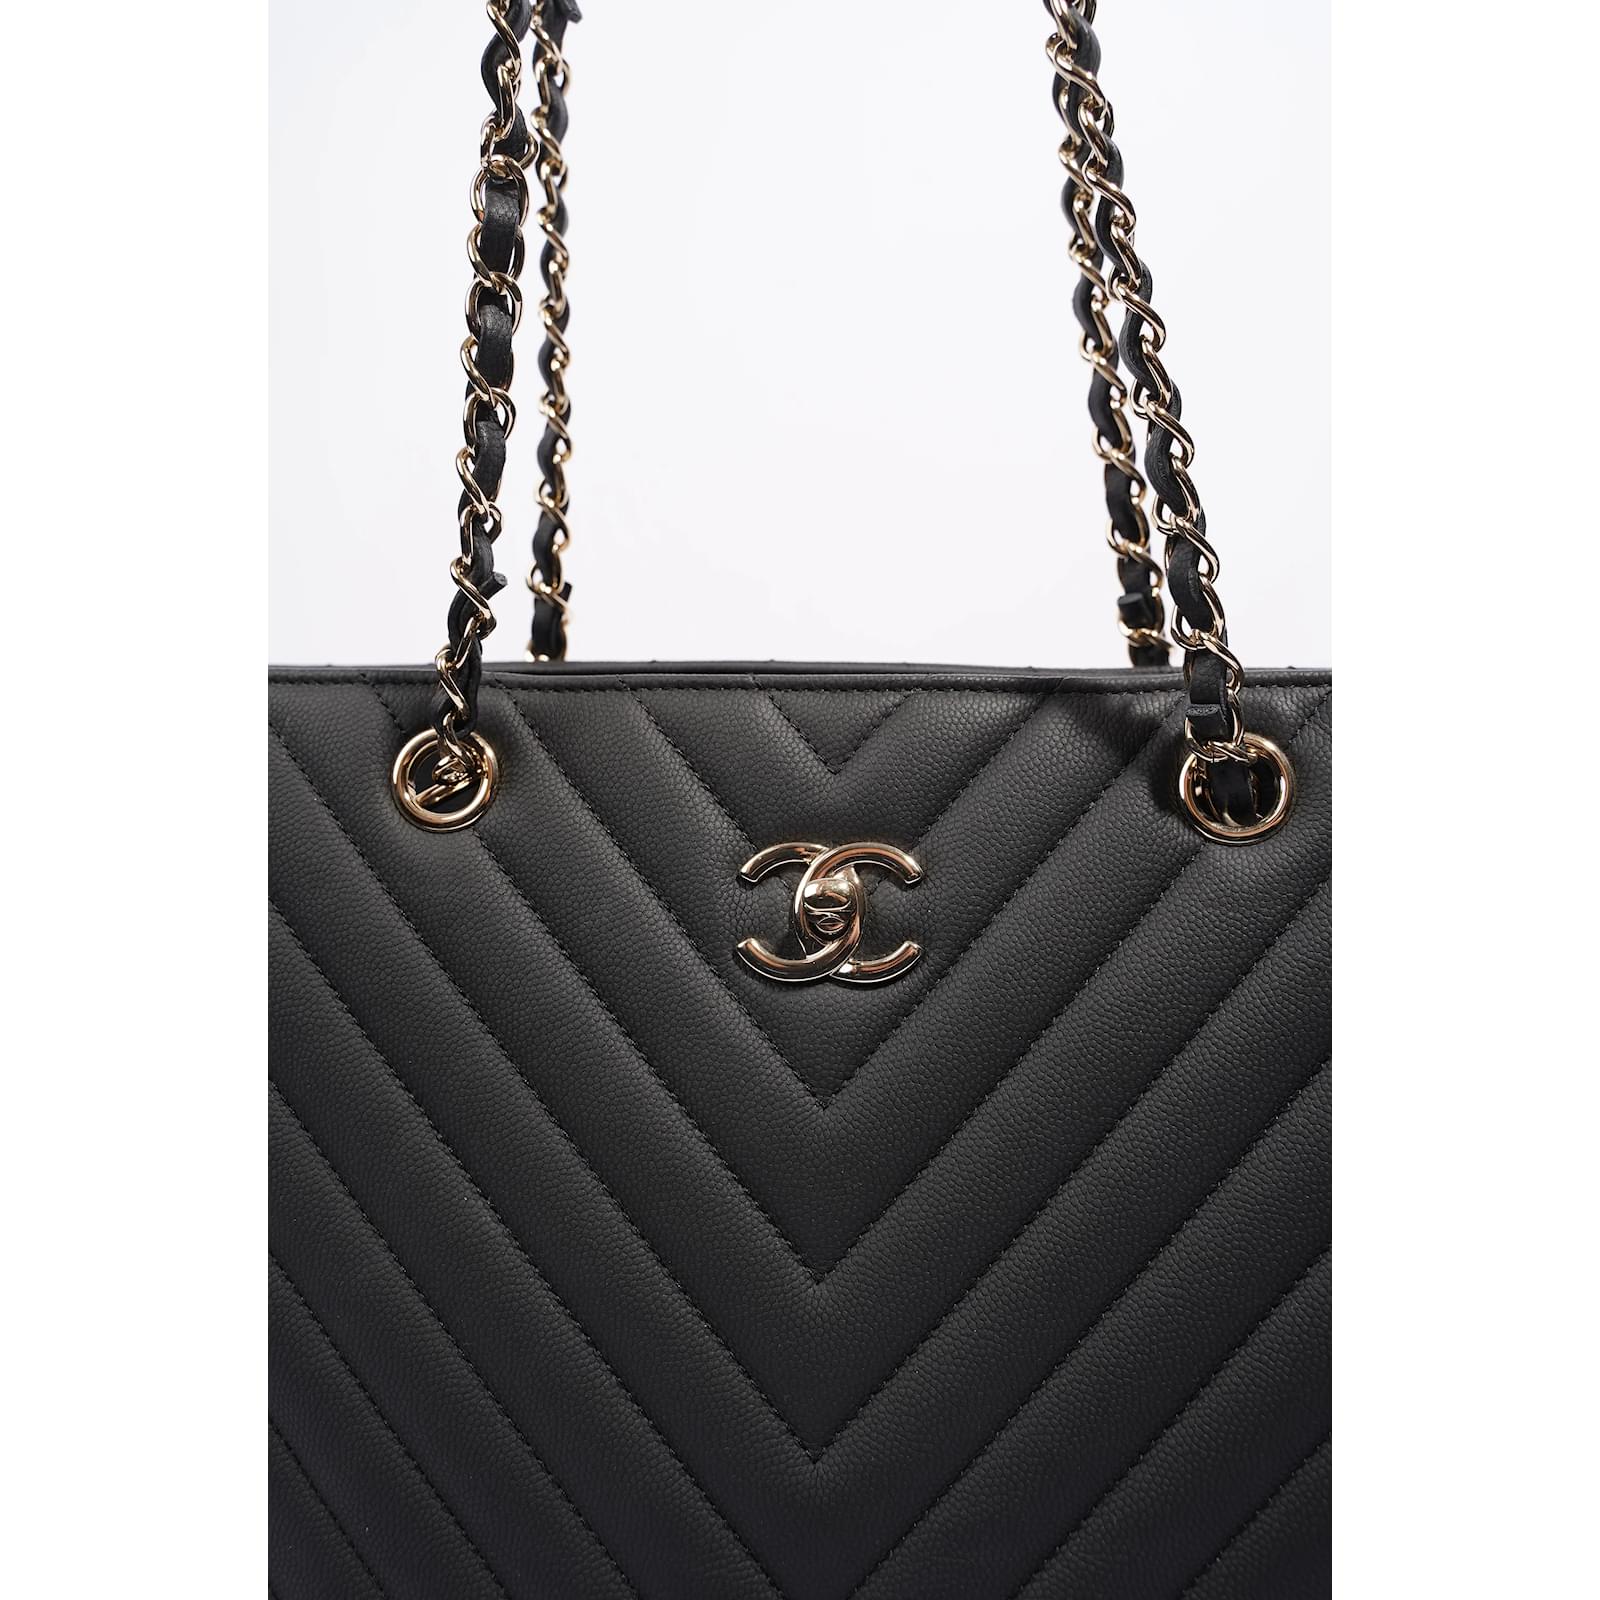 Handbags Chanel Chanel Womens Lambskin Classic Chevron Timeless Tote Black